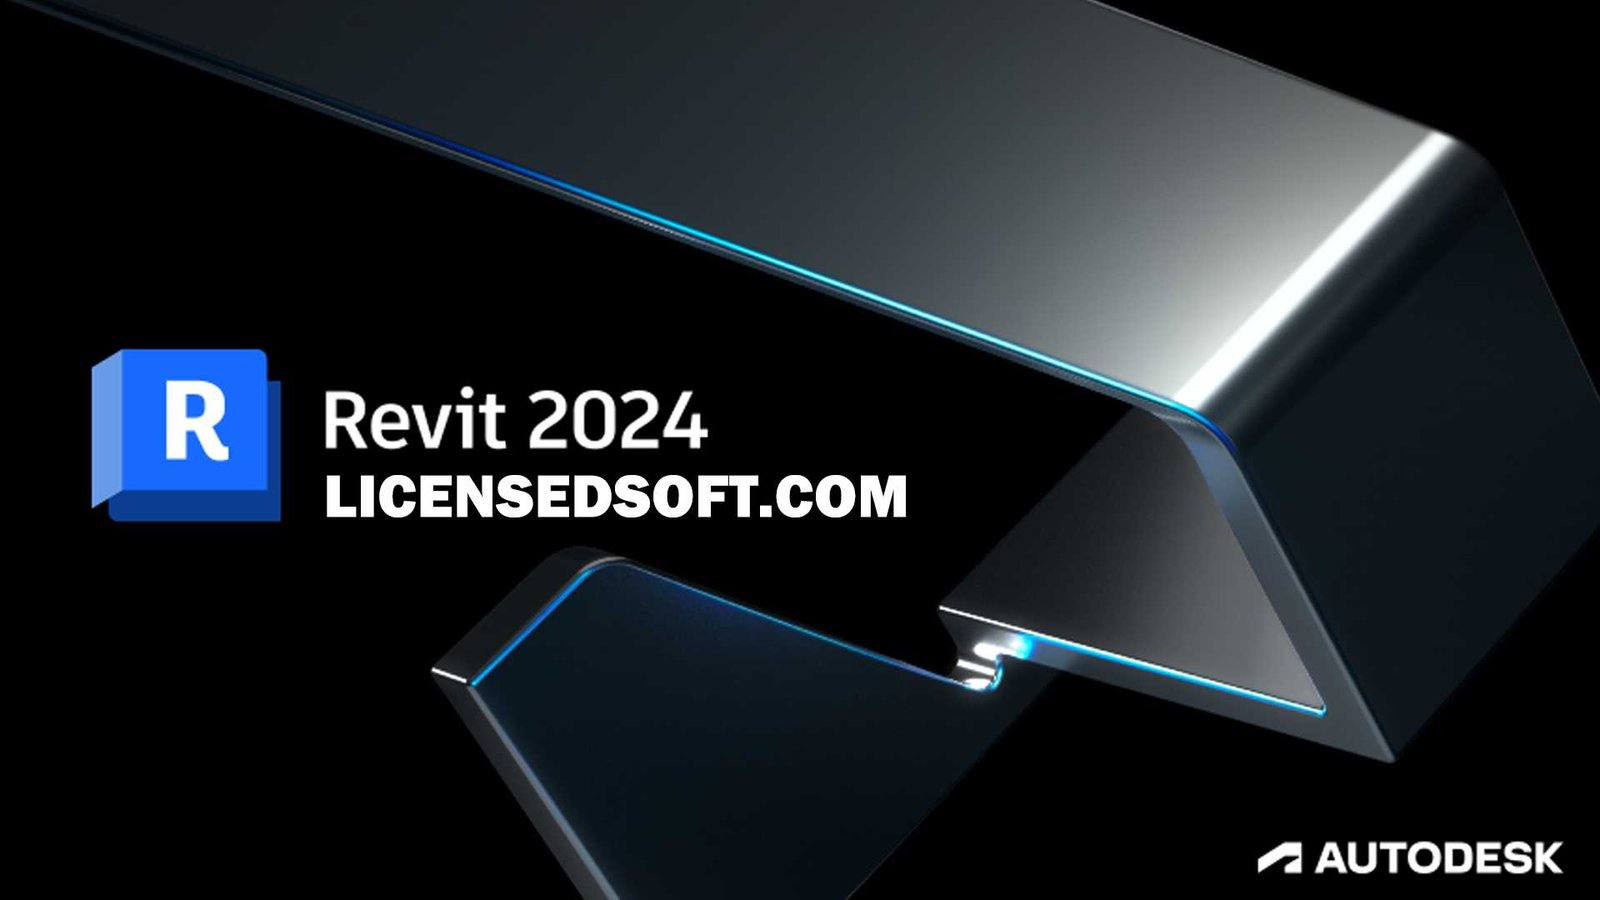 Autodesk Revit 2024 Cover By LicensedSoft